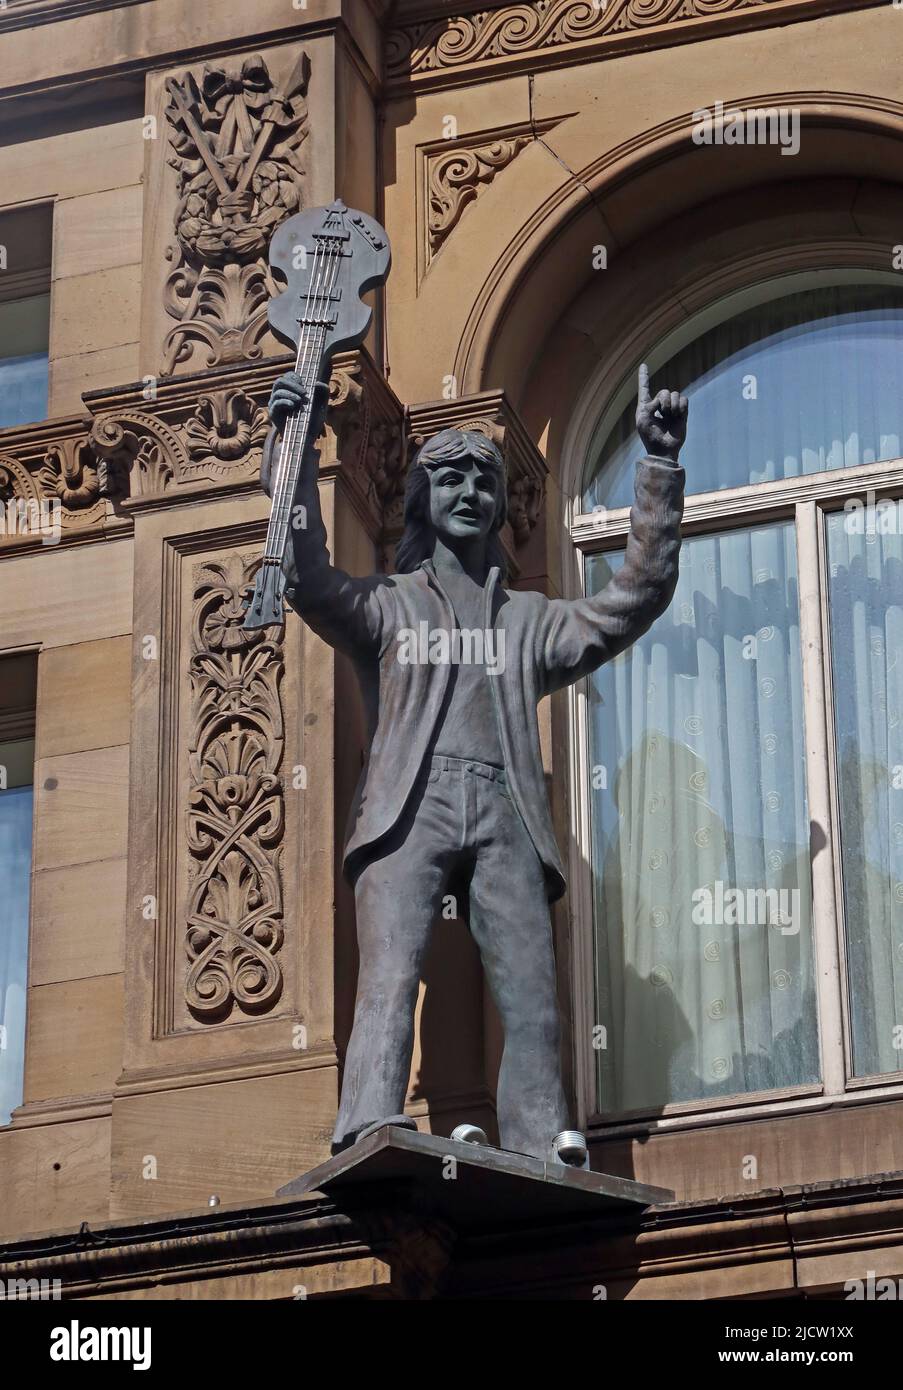 Paul McCartney - le statue dei Beatle di Liverpool - i Fab Four, all'esterno dell'Hard Day's Night Hotel, Central Buildings, N John St, Liverpool L2 6RR Foto Stock